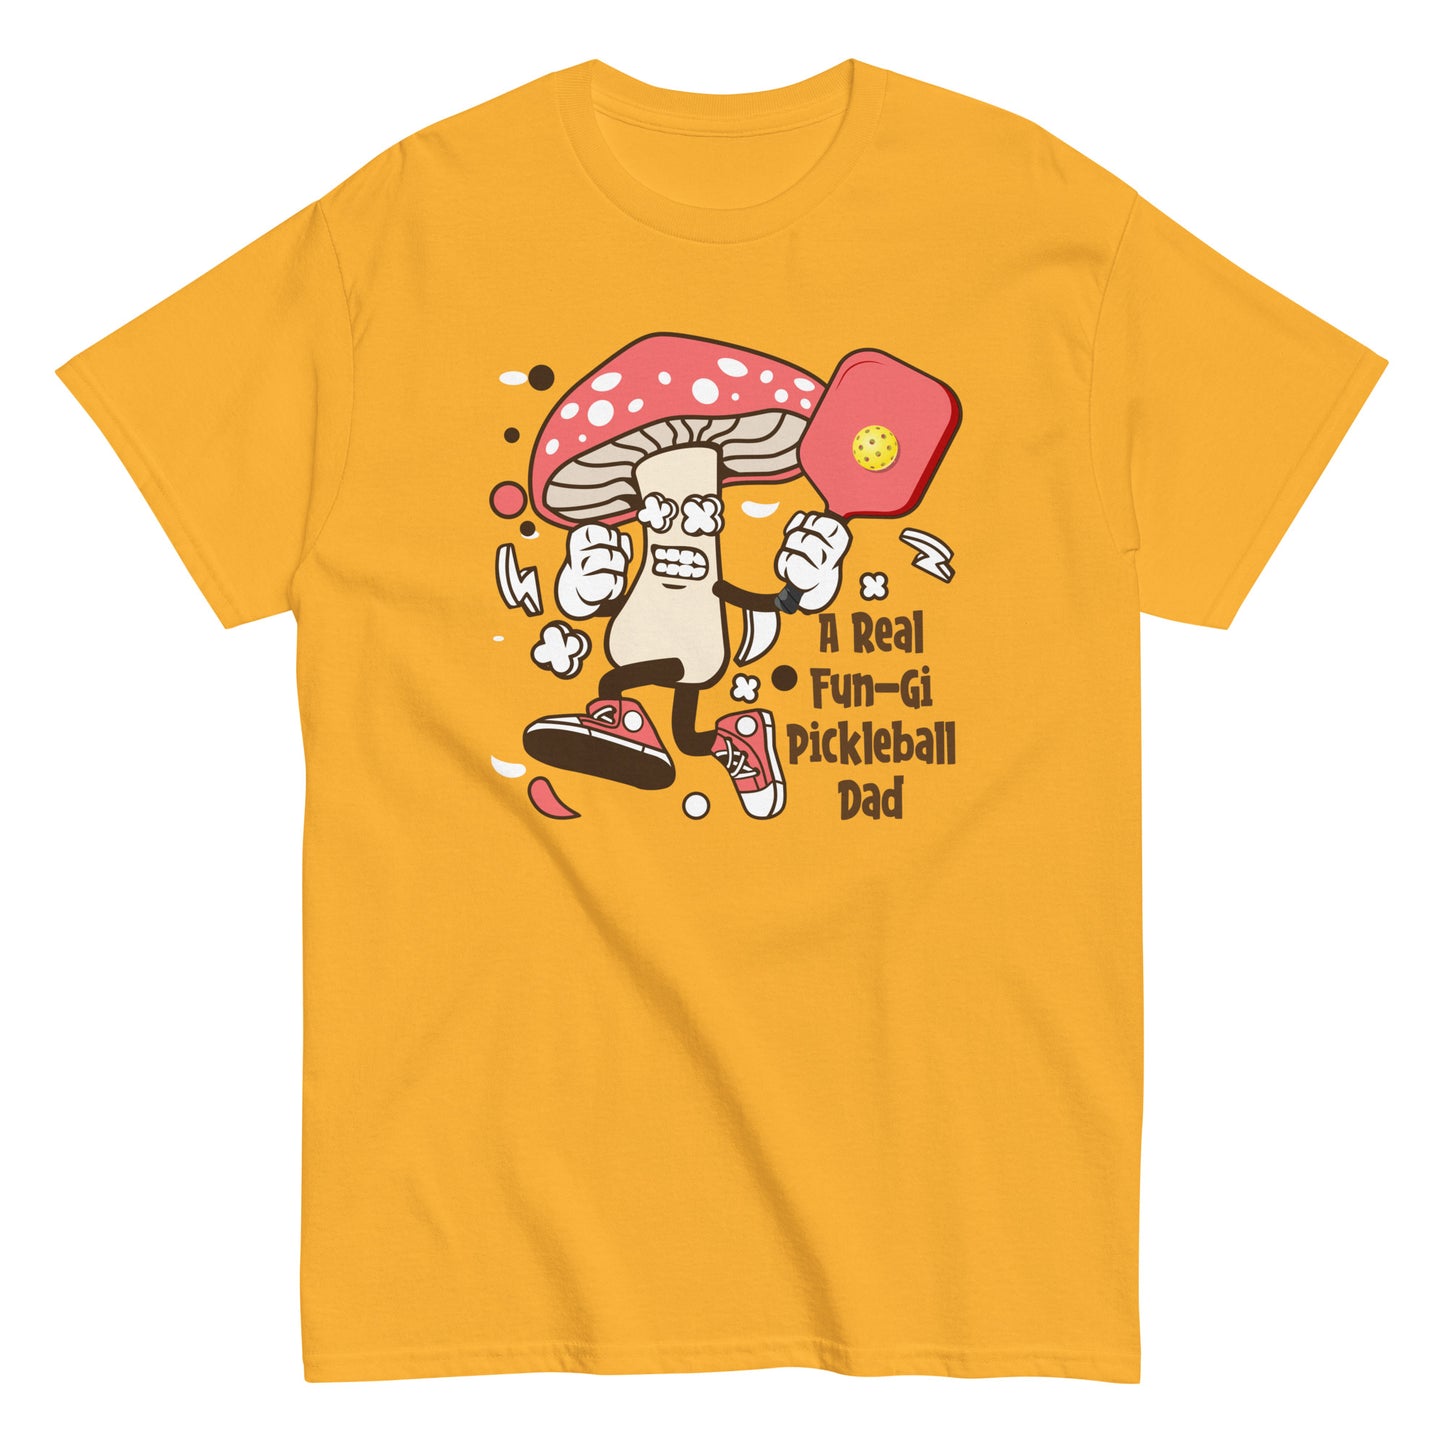 Retro Pickleball Pun: "A Real Fun-Gi Pickleball Dad", Father's Day Mens Gold T-Shirt